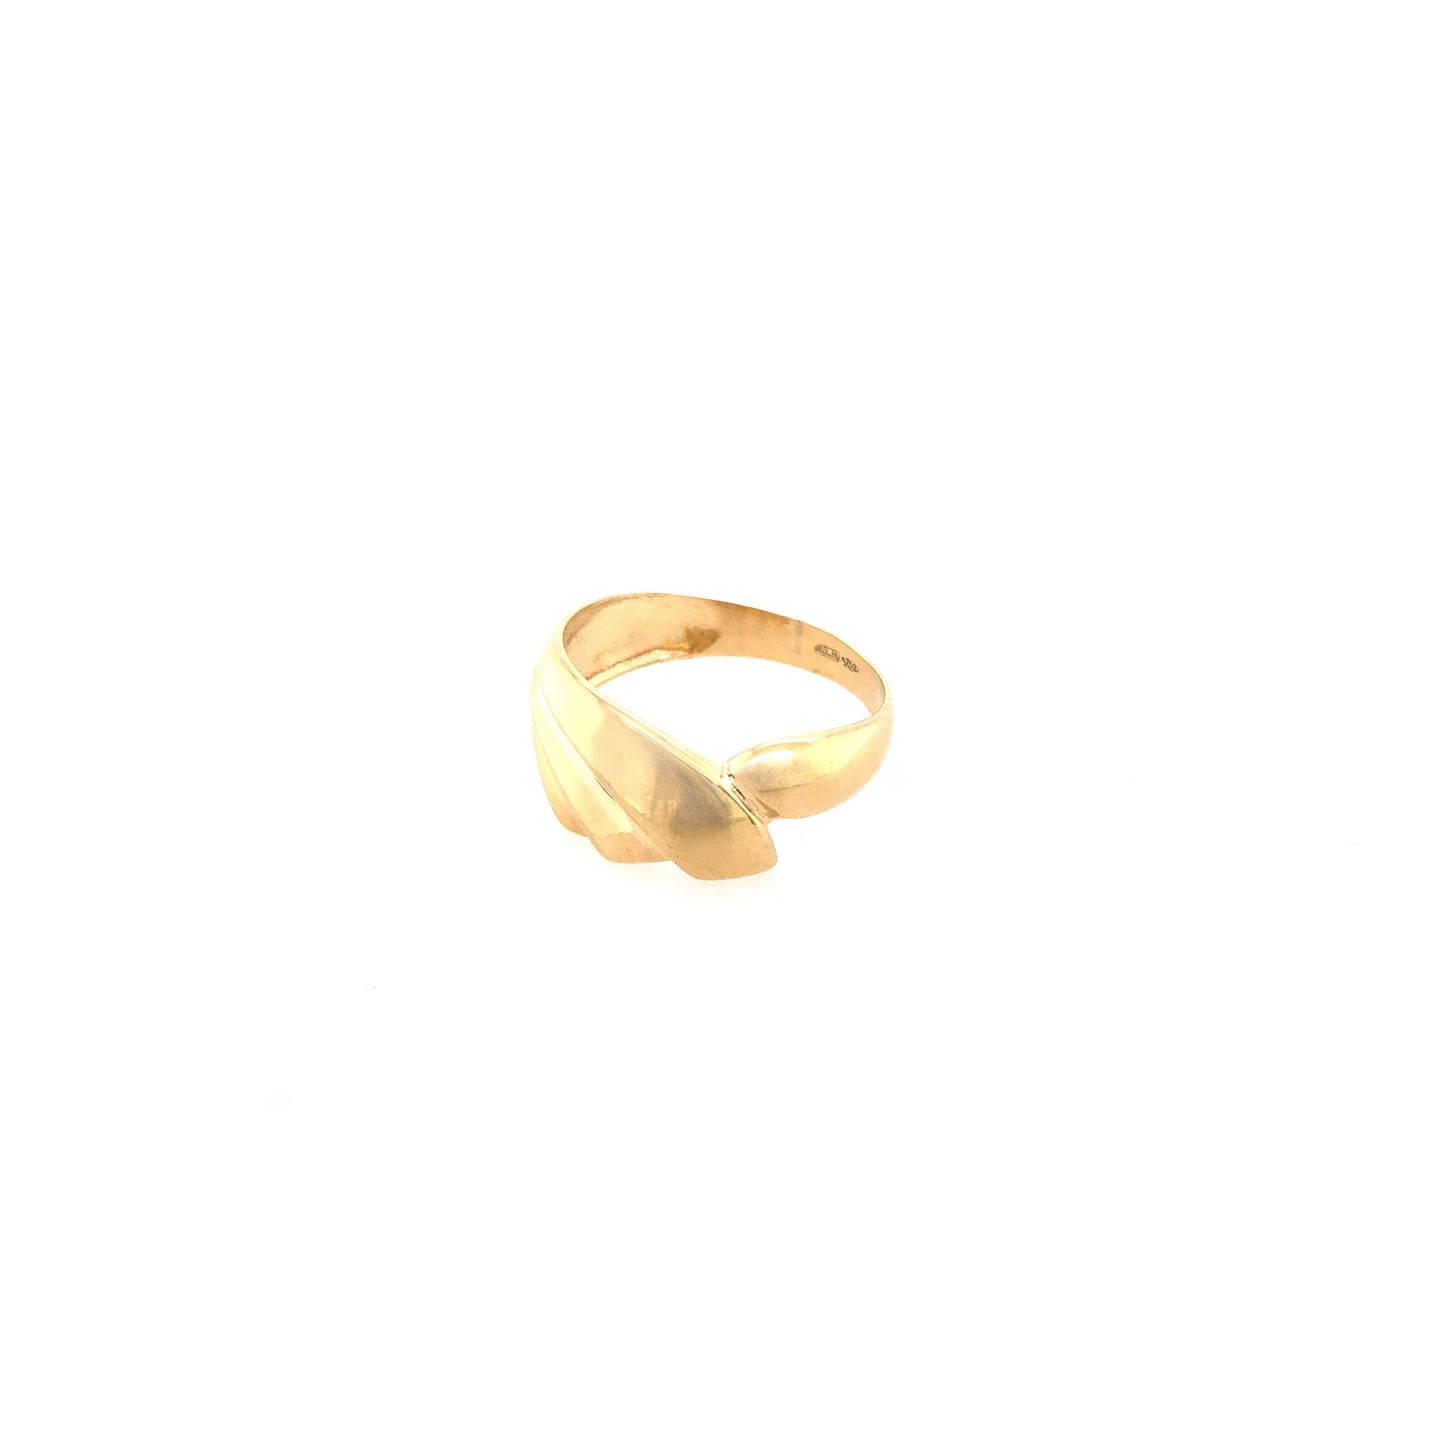 Ring Gold 750 / 18k Gr.56, mit Wellenmuster